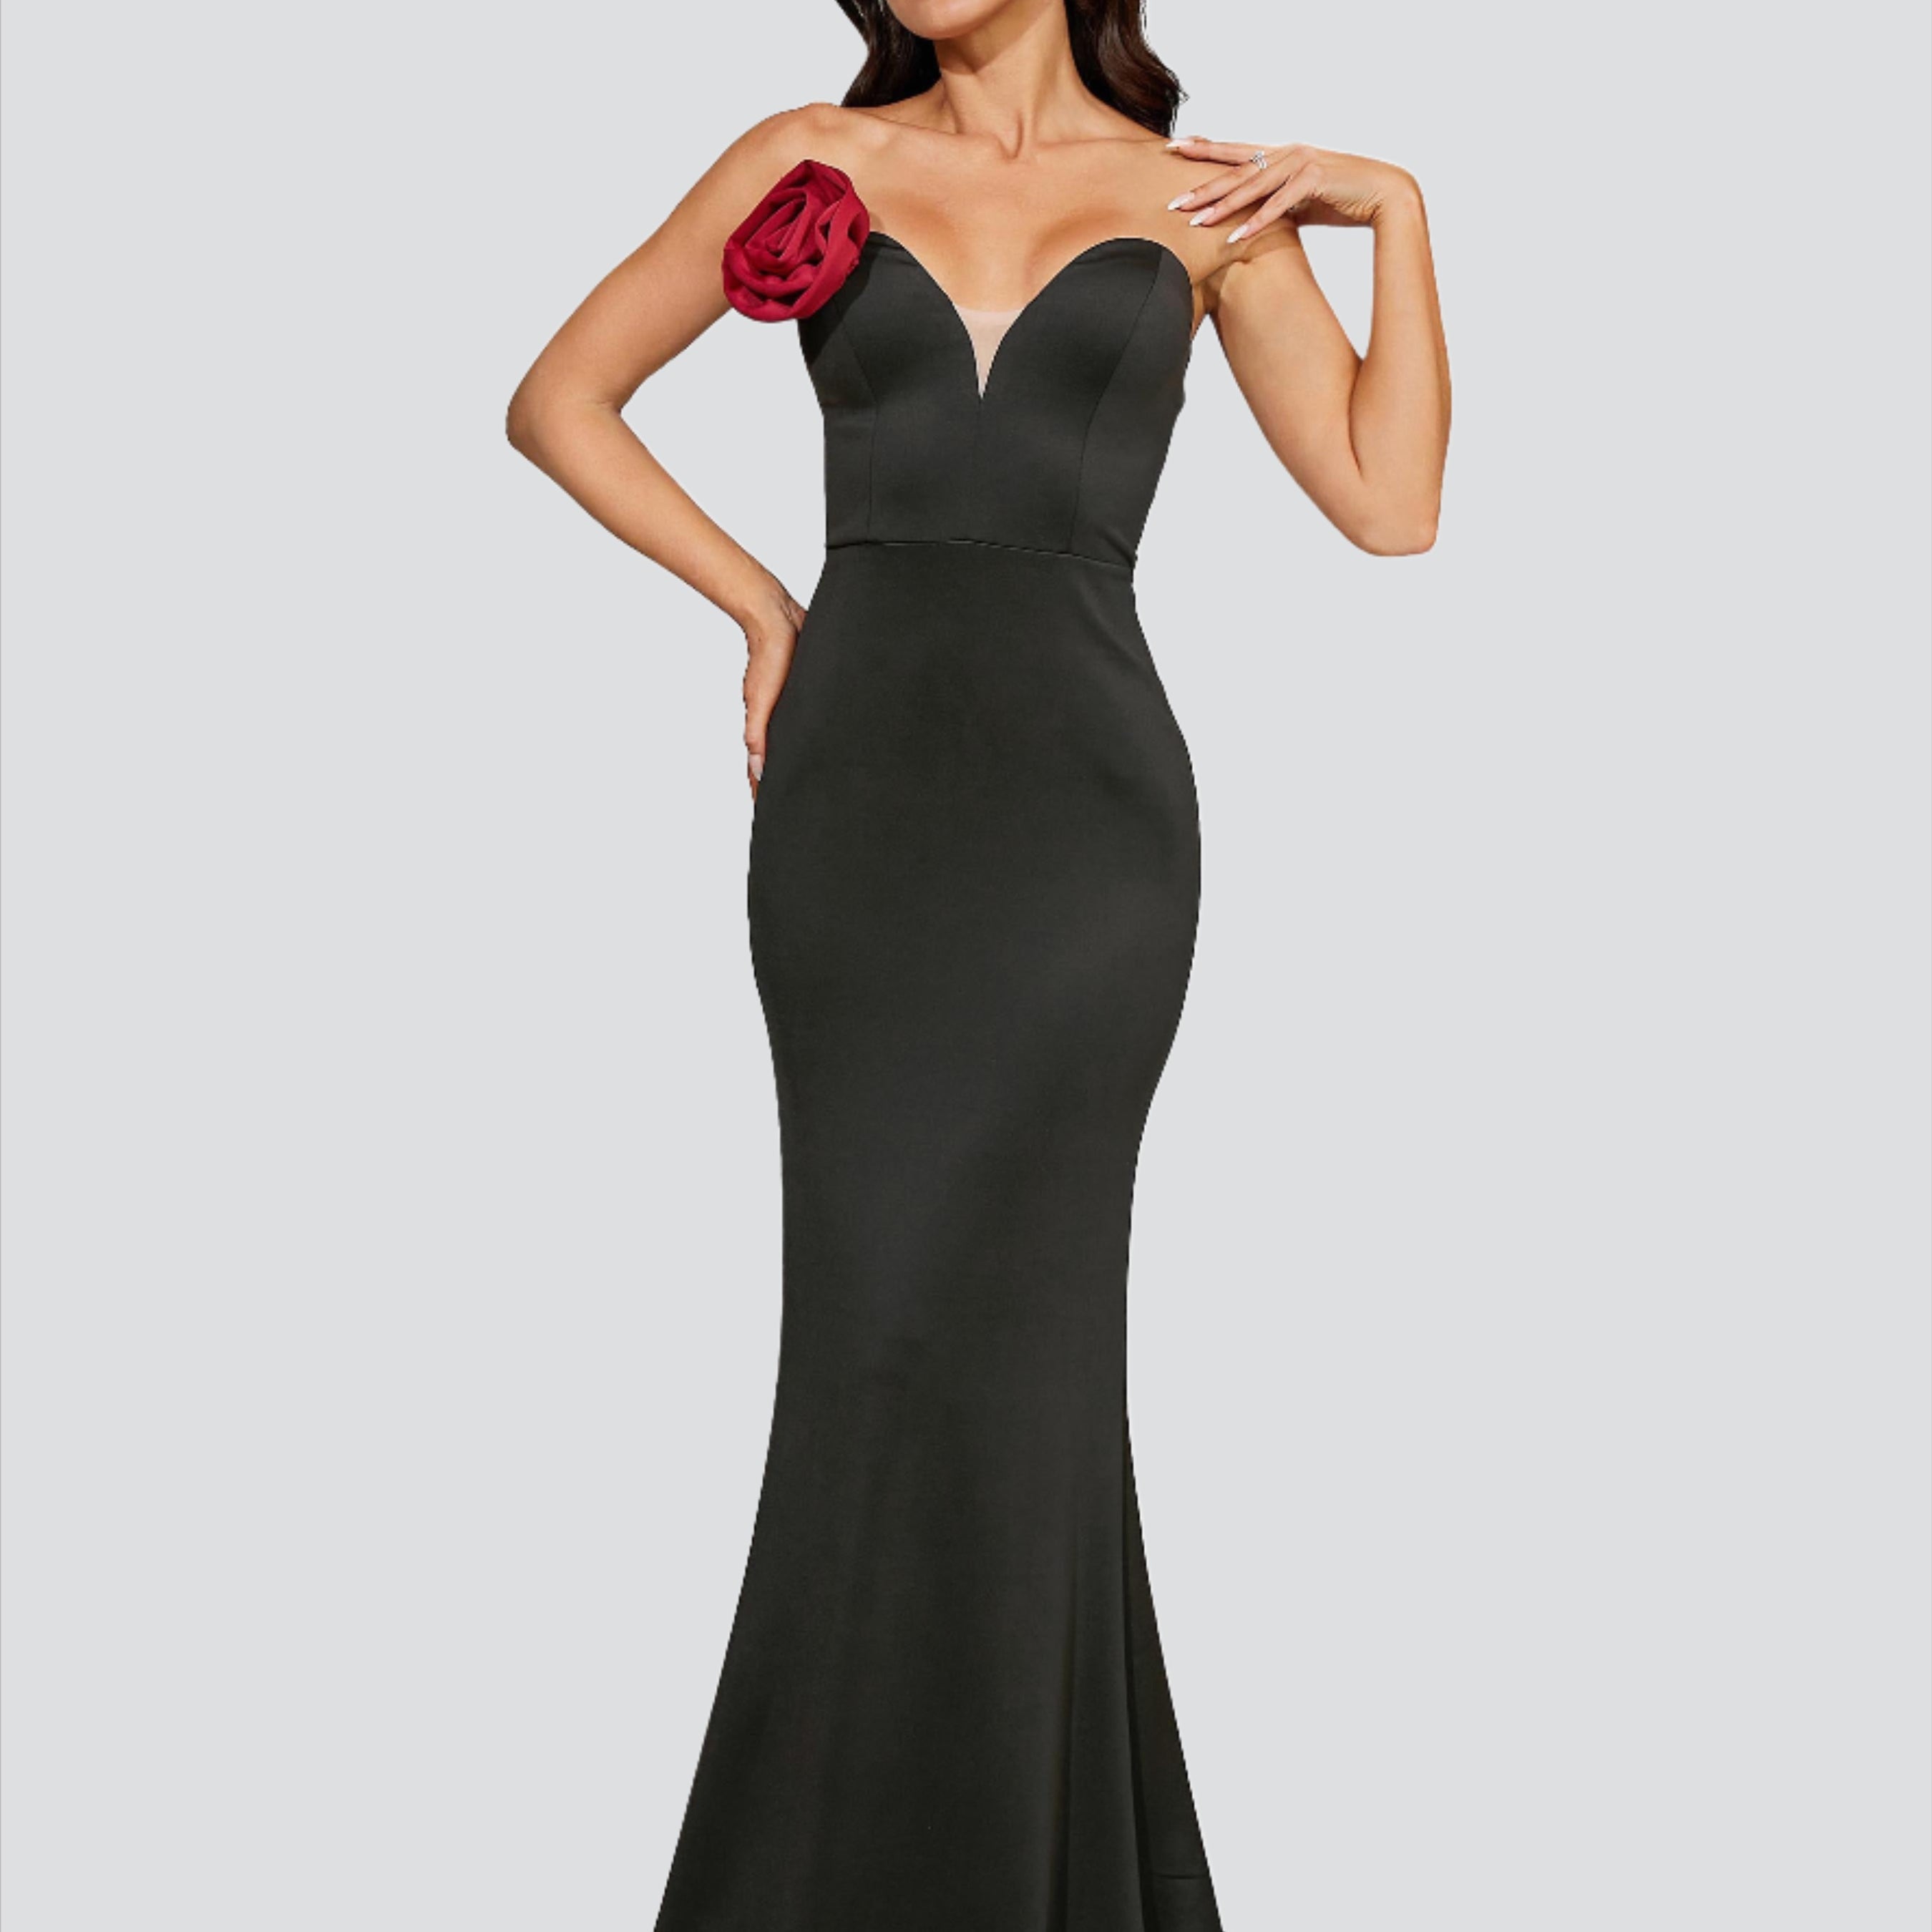 Appliqued Black Mermaid Evening Dress